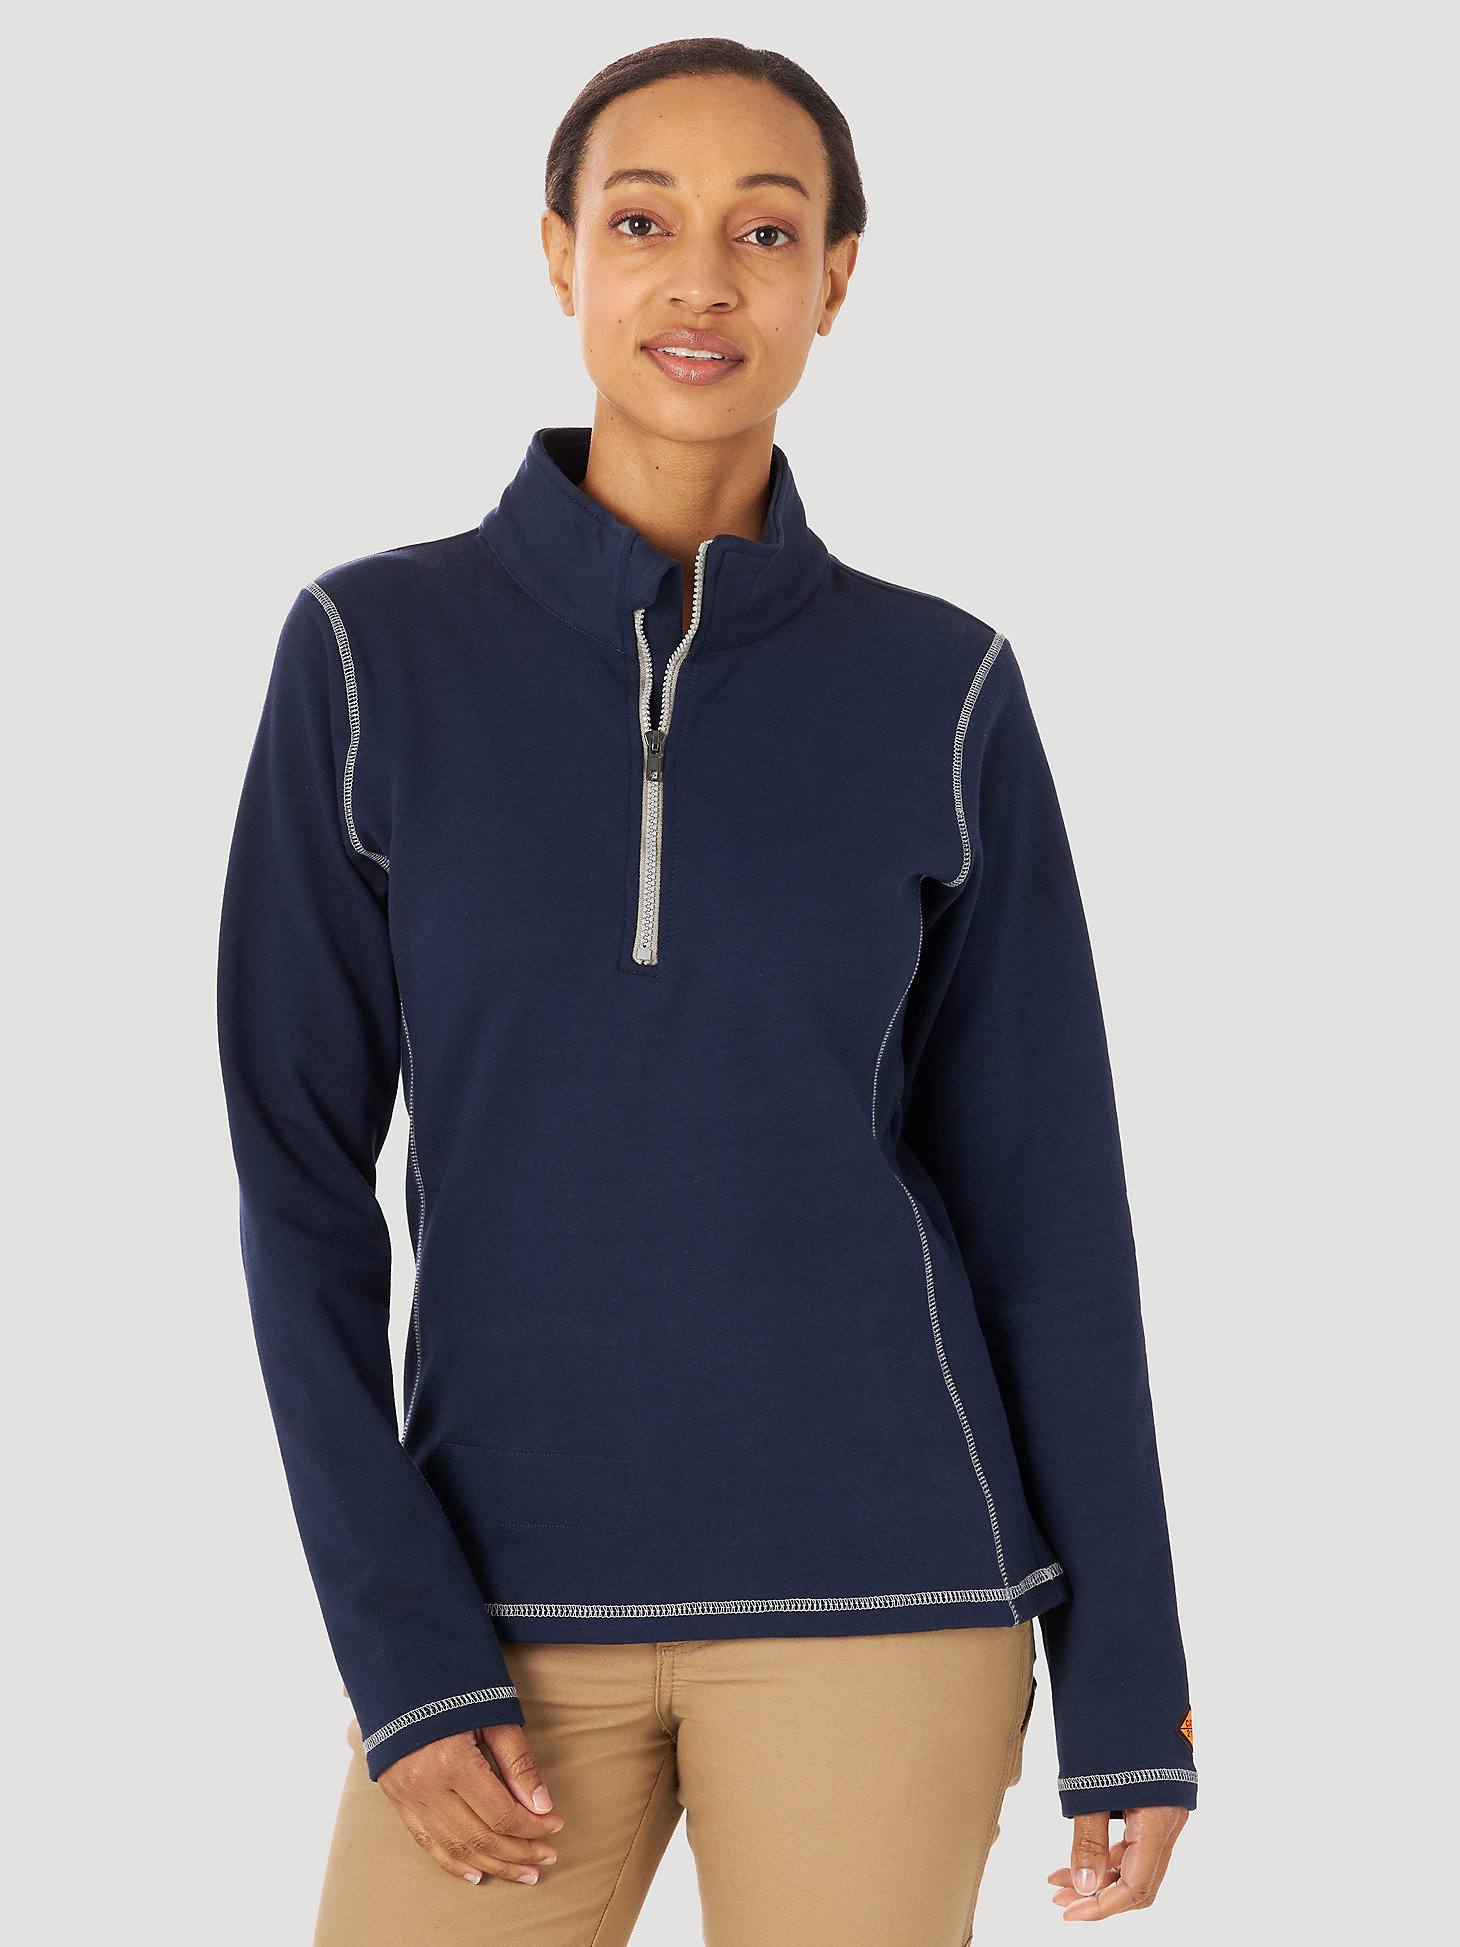 Women's Wrangler® Flame Resistant Long Sleeve Quarter-Zip Pullover in Navy main view